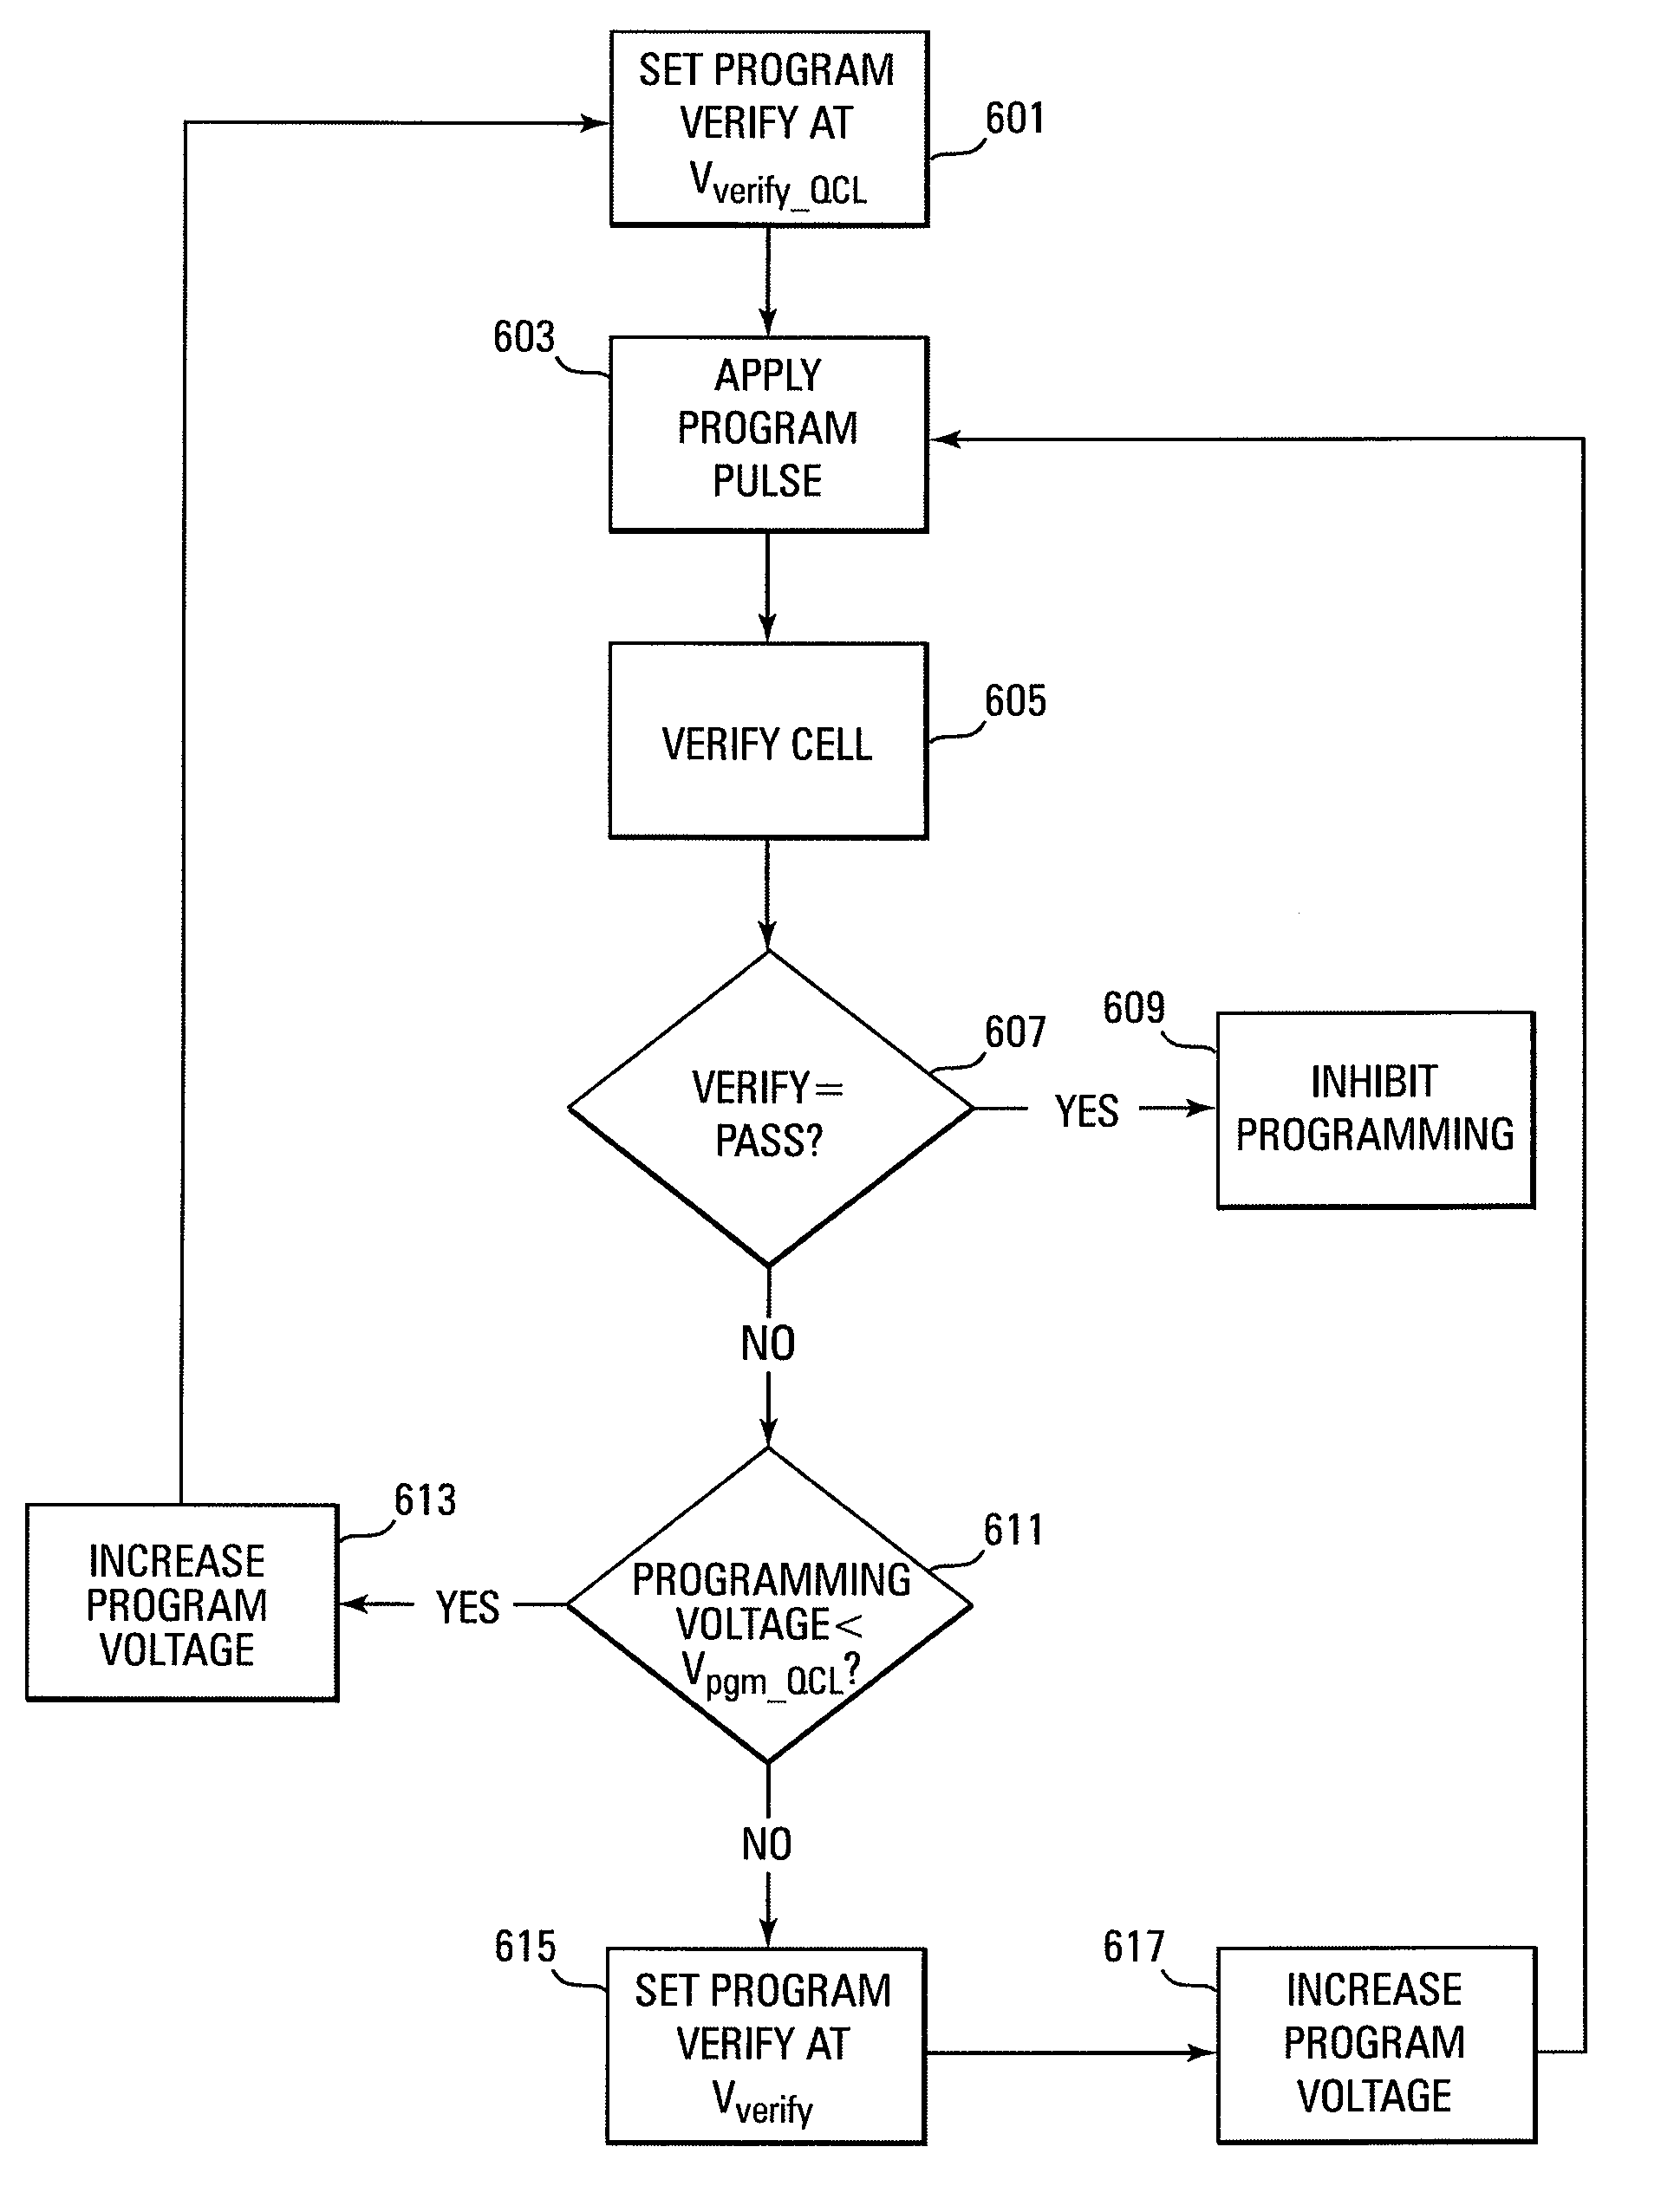 Multiple level program verify in a memory device